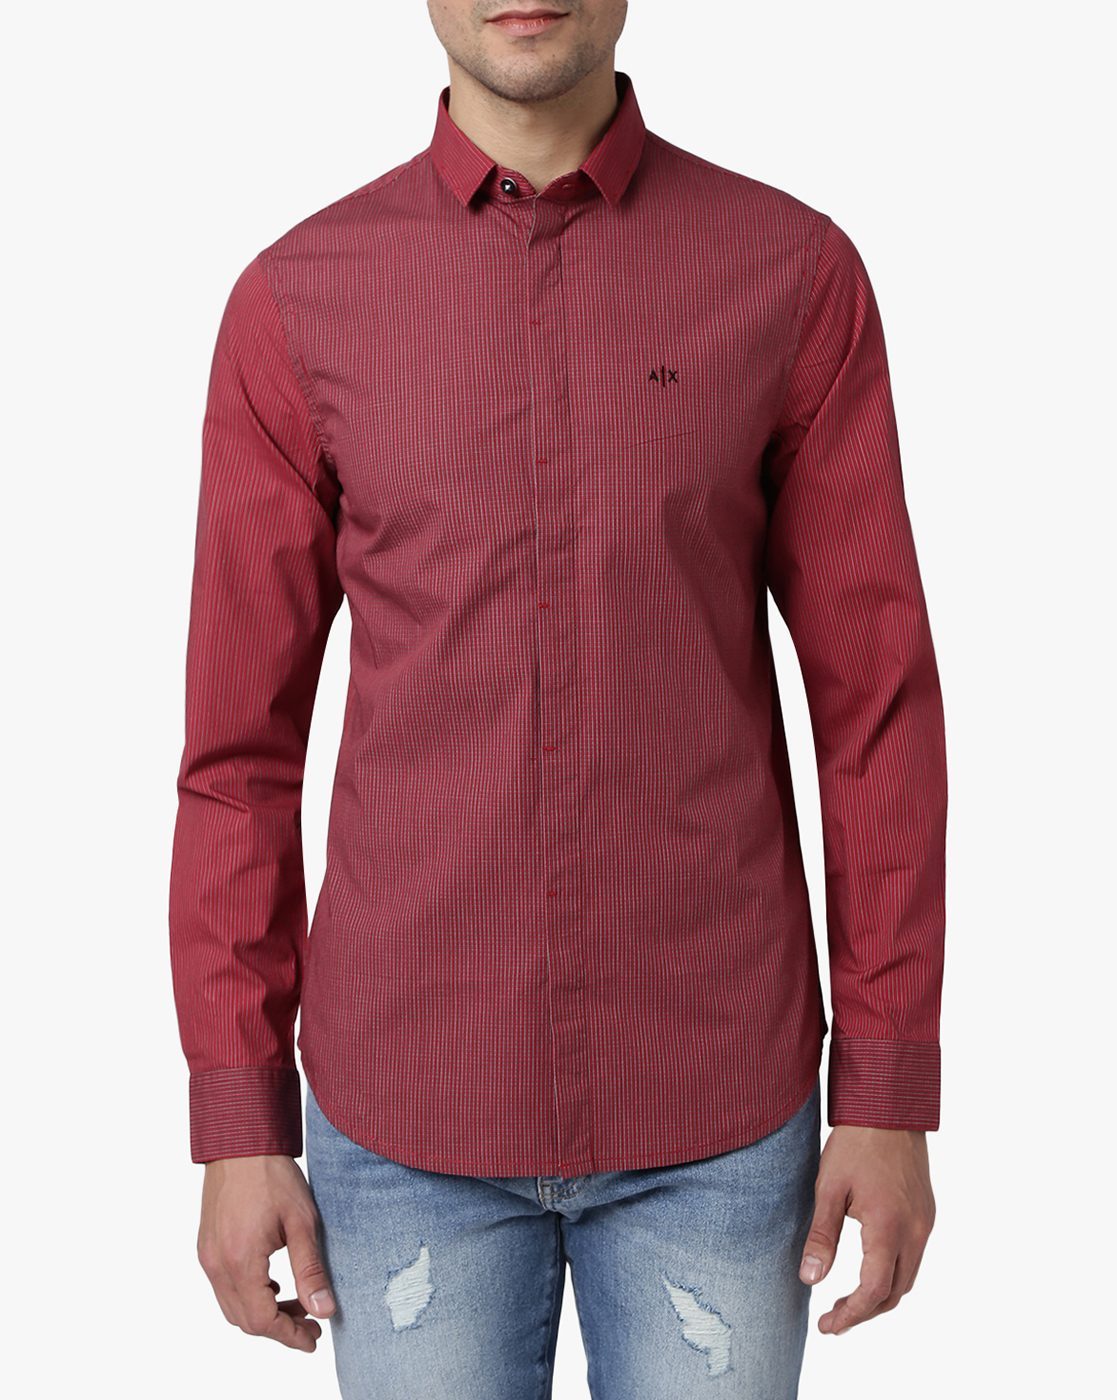 red armani exchange shirt